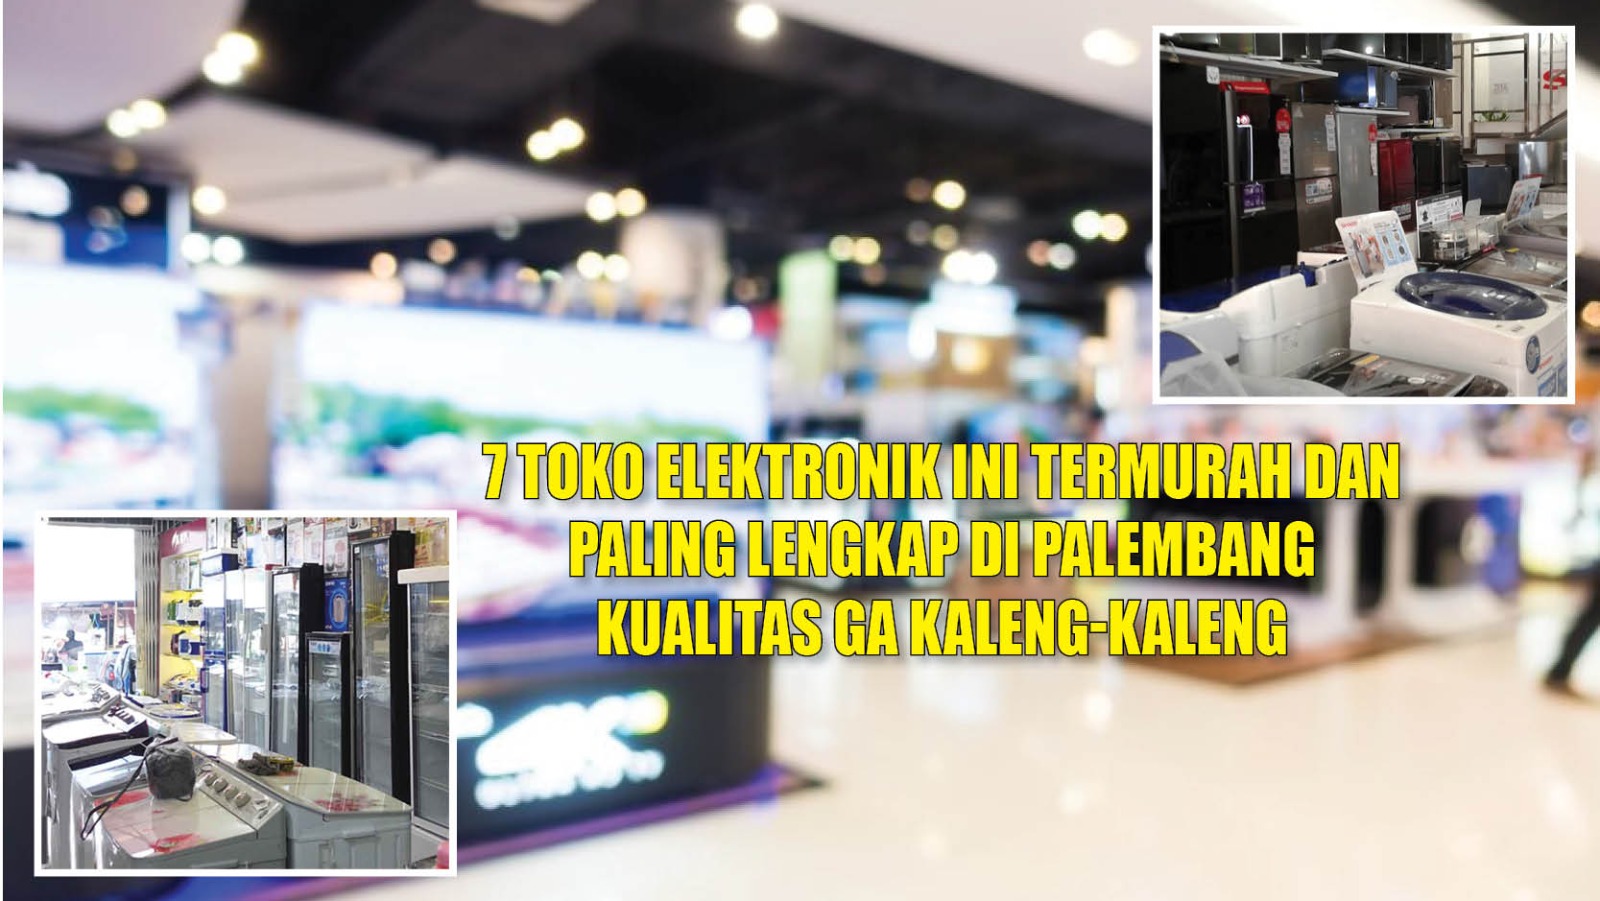 7 Toko Elektronik Termurah dan Paling Lengkap di Palembang, Kualitas Ga Kaleng-Kaleng 